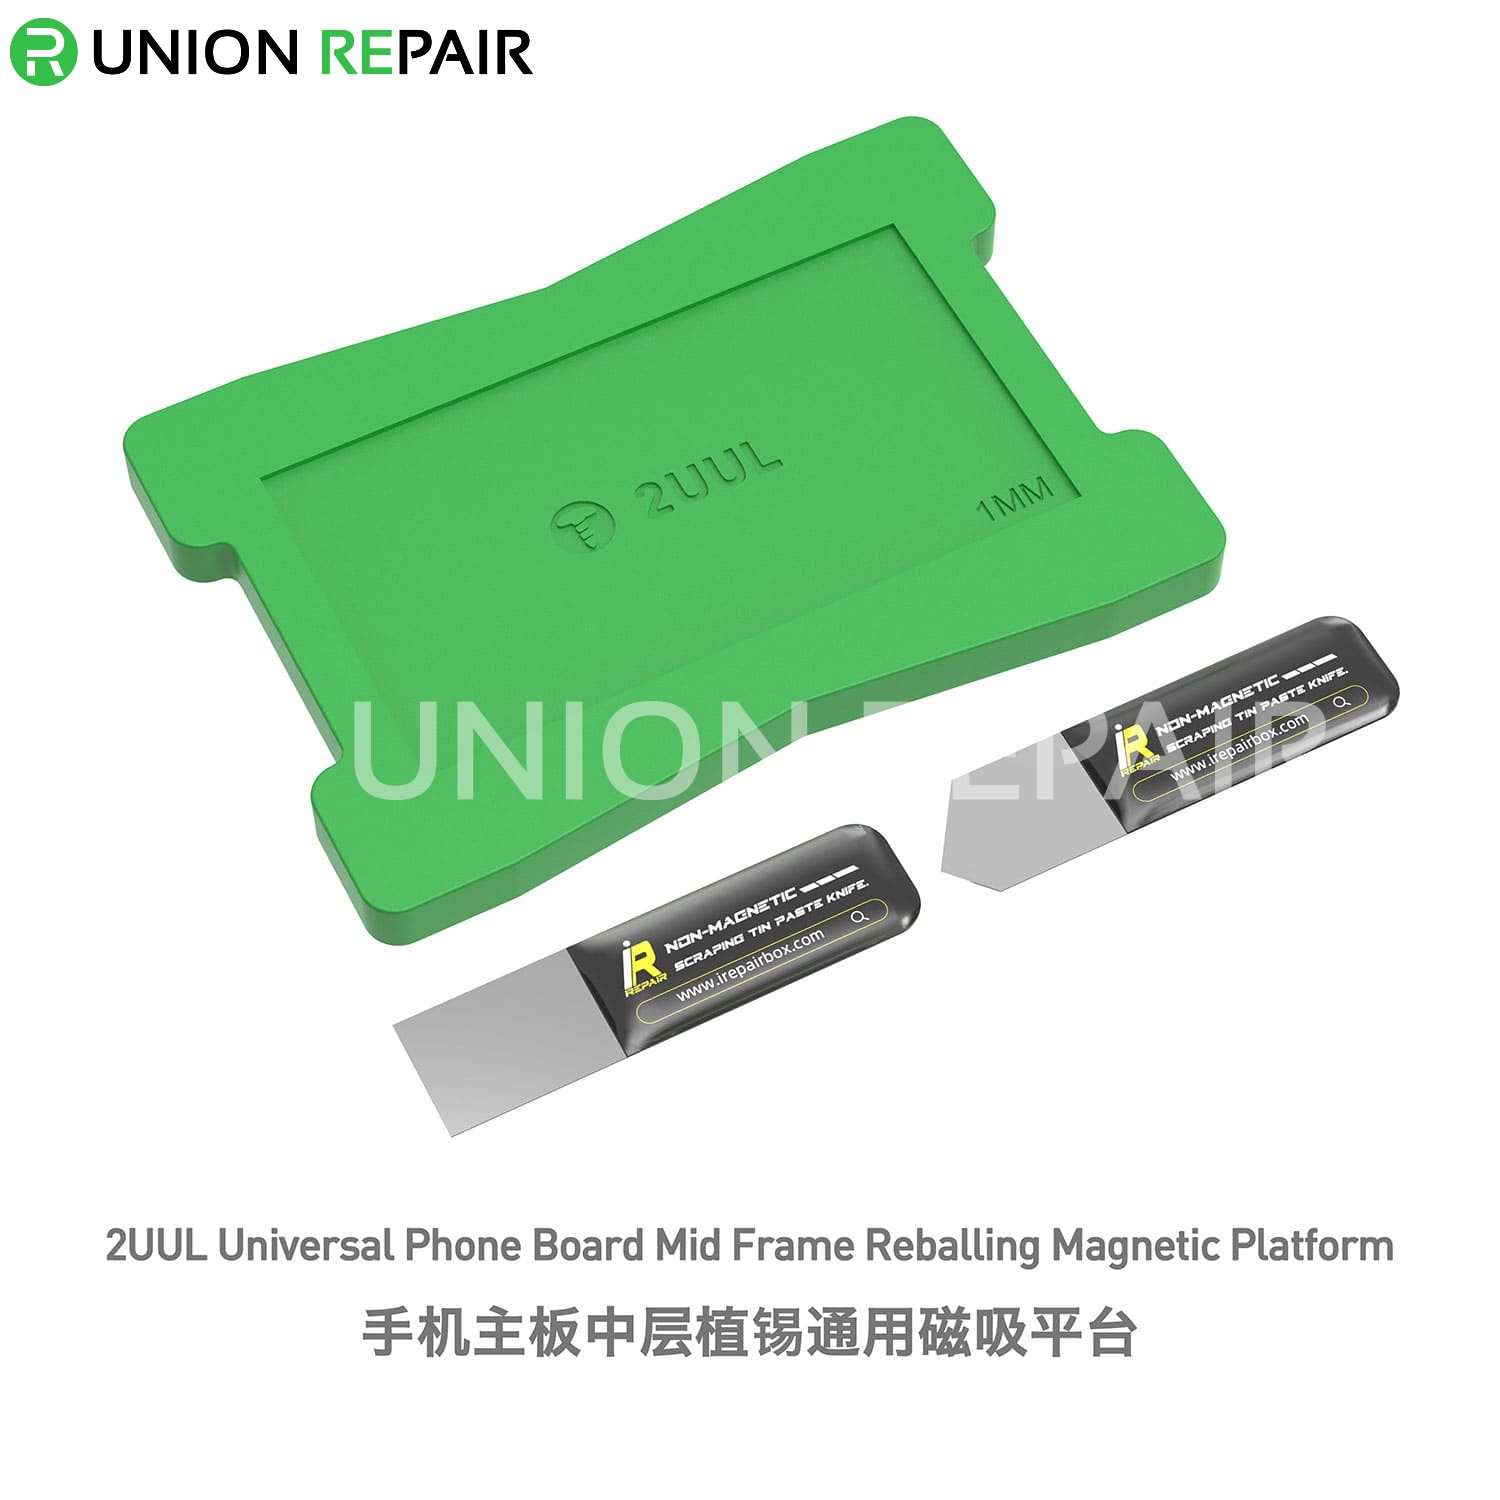 2UUL Universal Phone Board Mid Frame Reballing Magnetic Platform